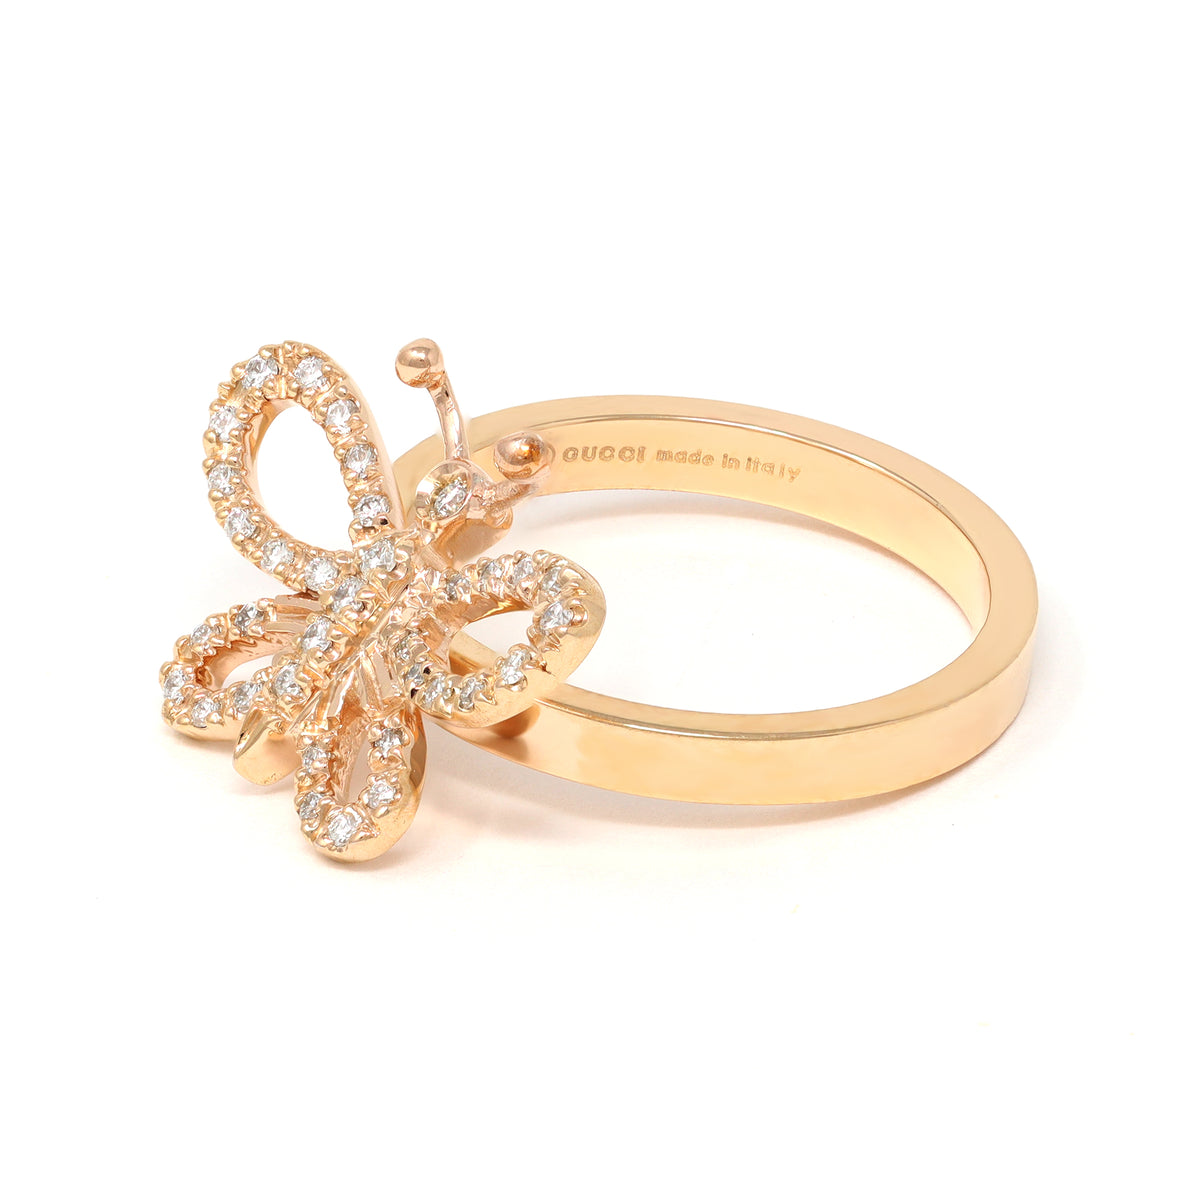 Gucci Flora Farfalla 18k Rose Gold Ring makers mark view